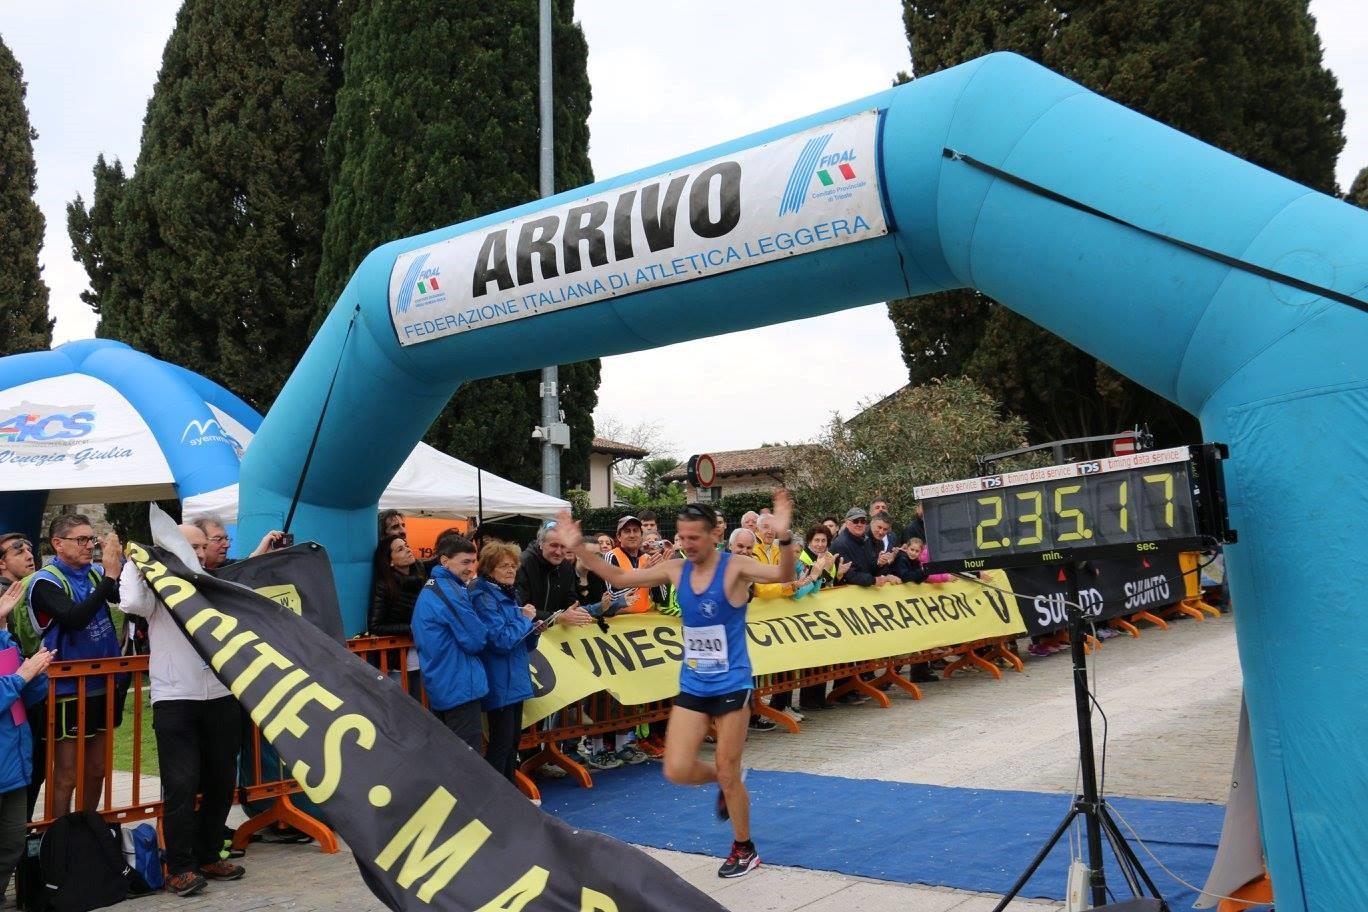 Saverio Giardiello crossing the finish line at the 2017 UNESCO Cities Marathon – © A. Fogar